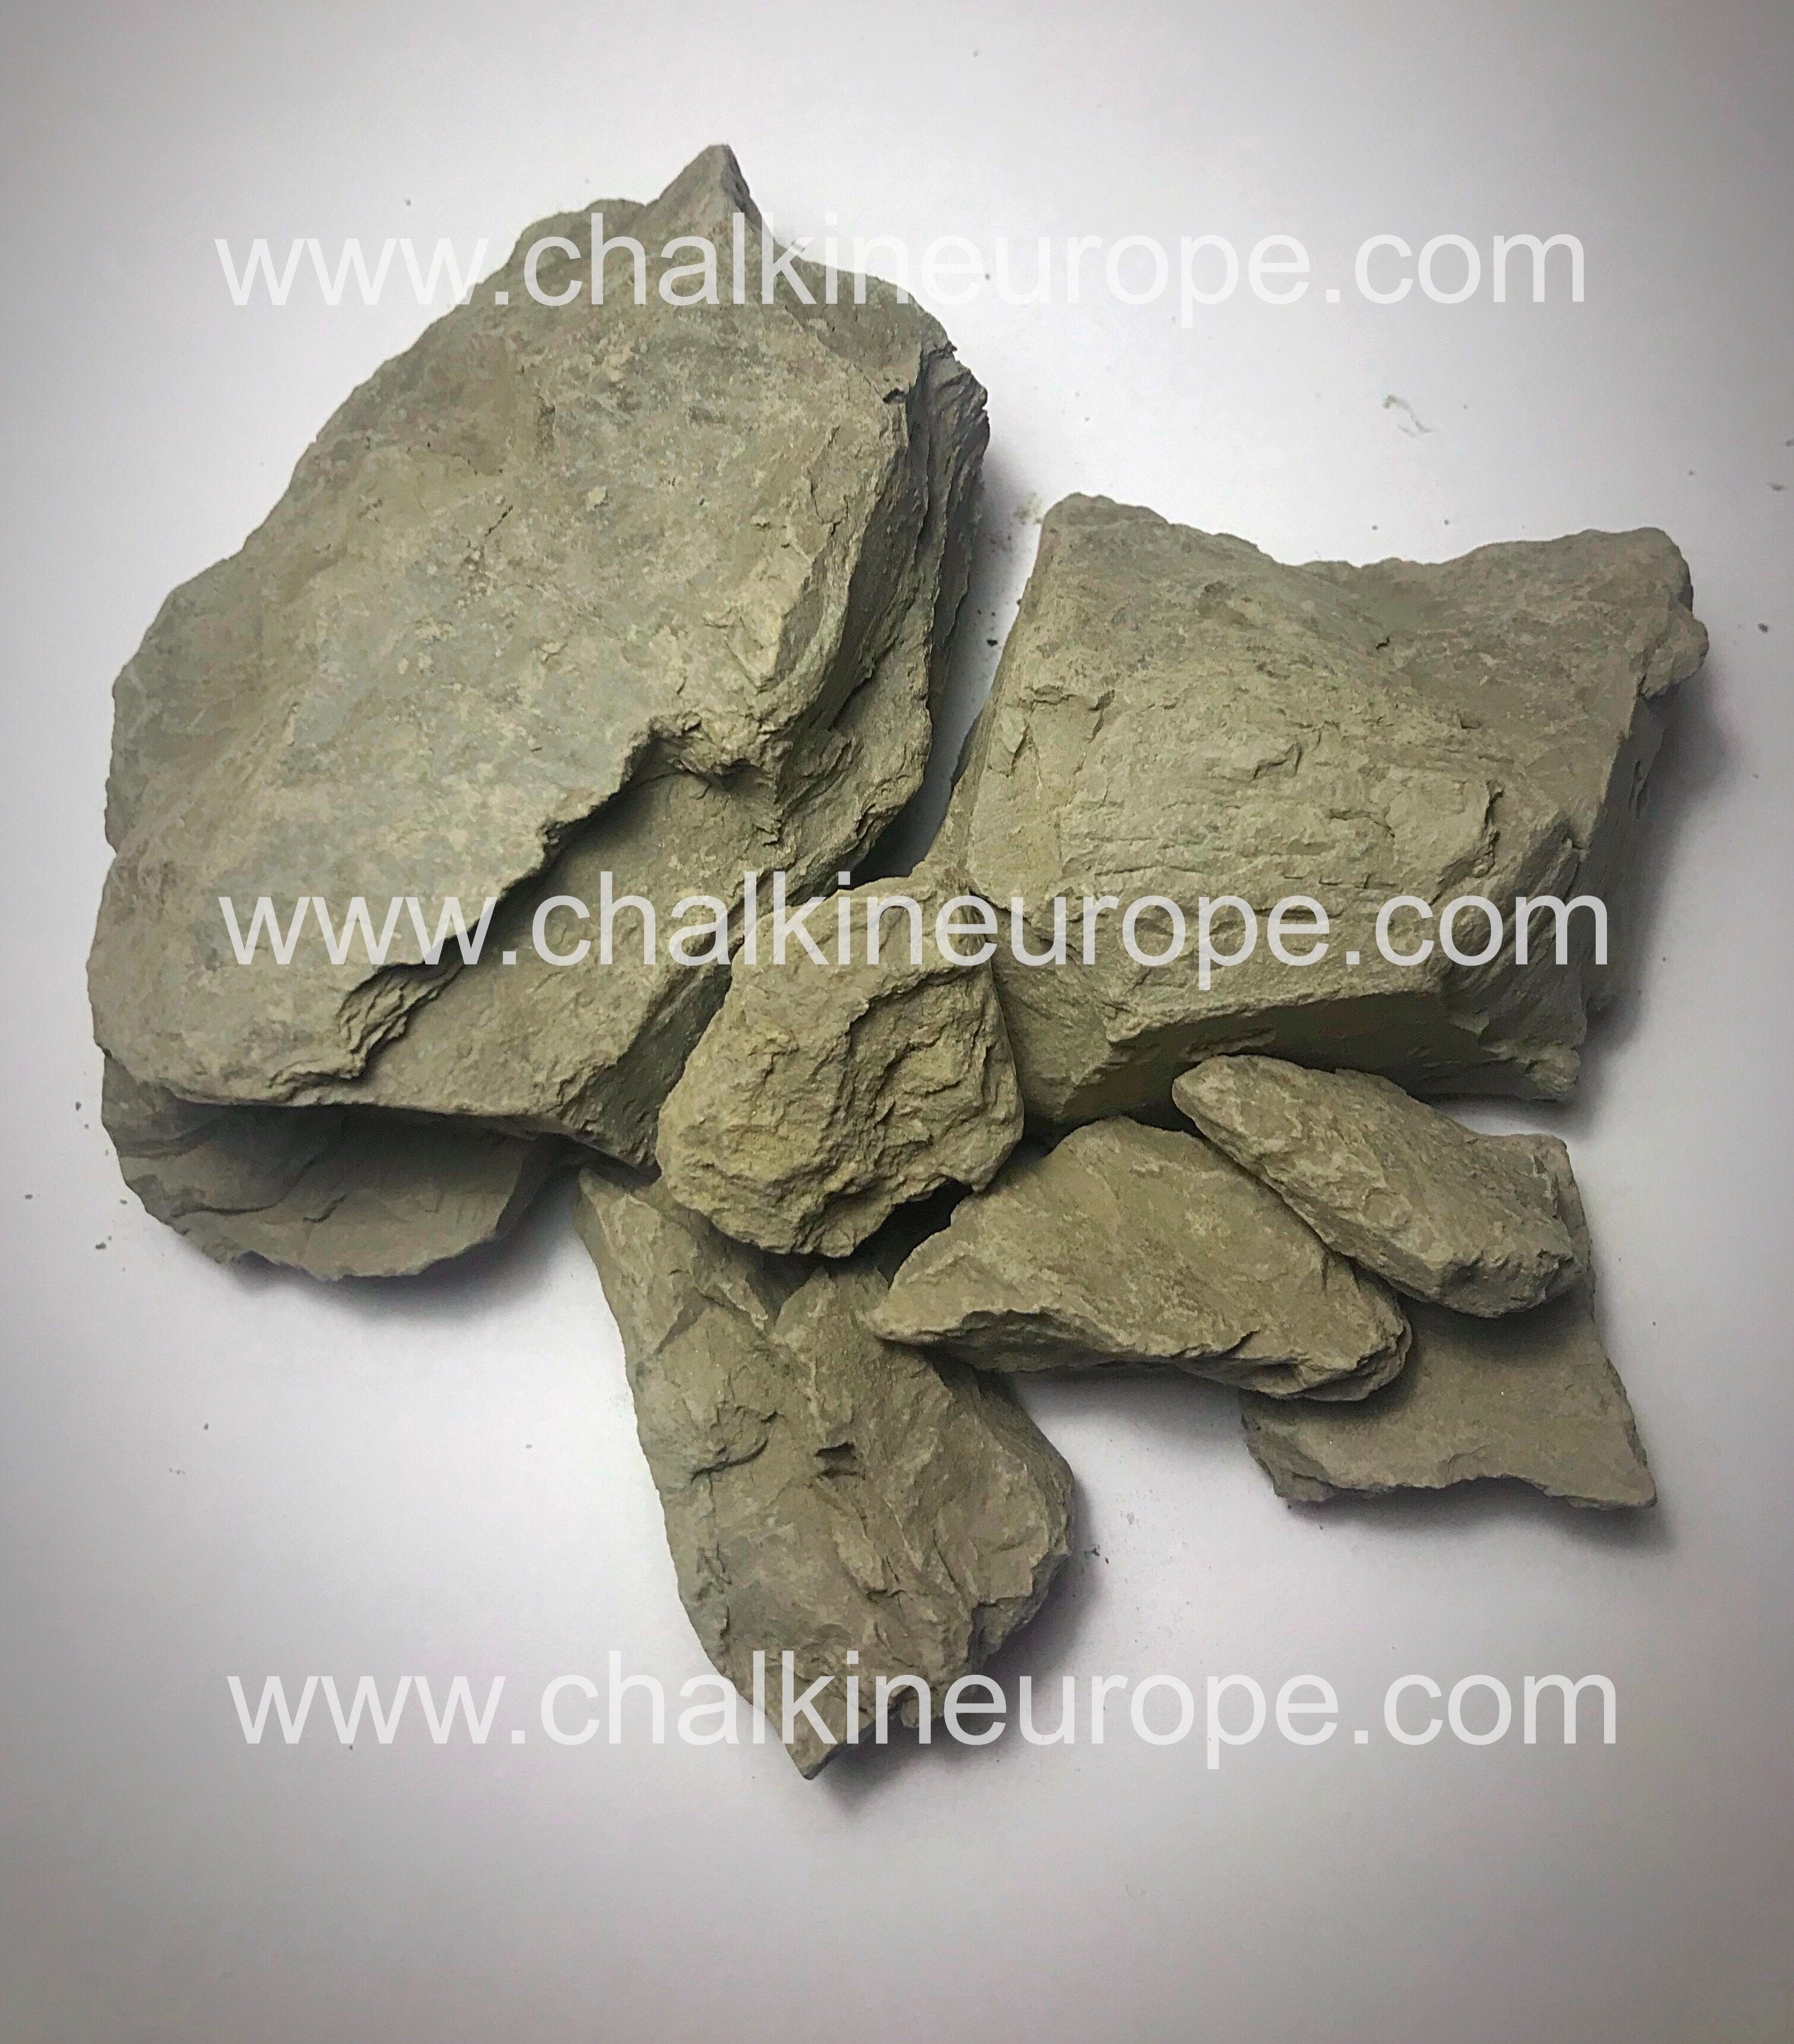 Black Clay - Chalkineurope